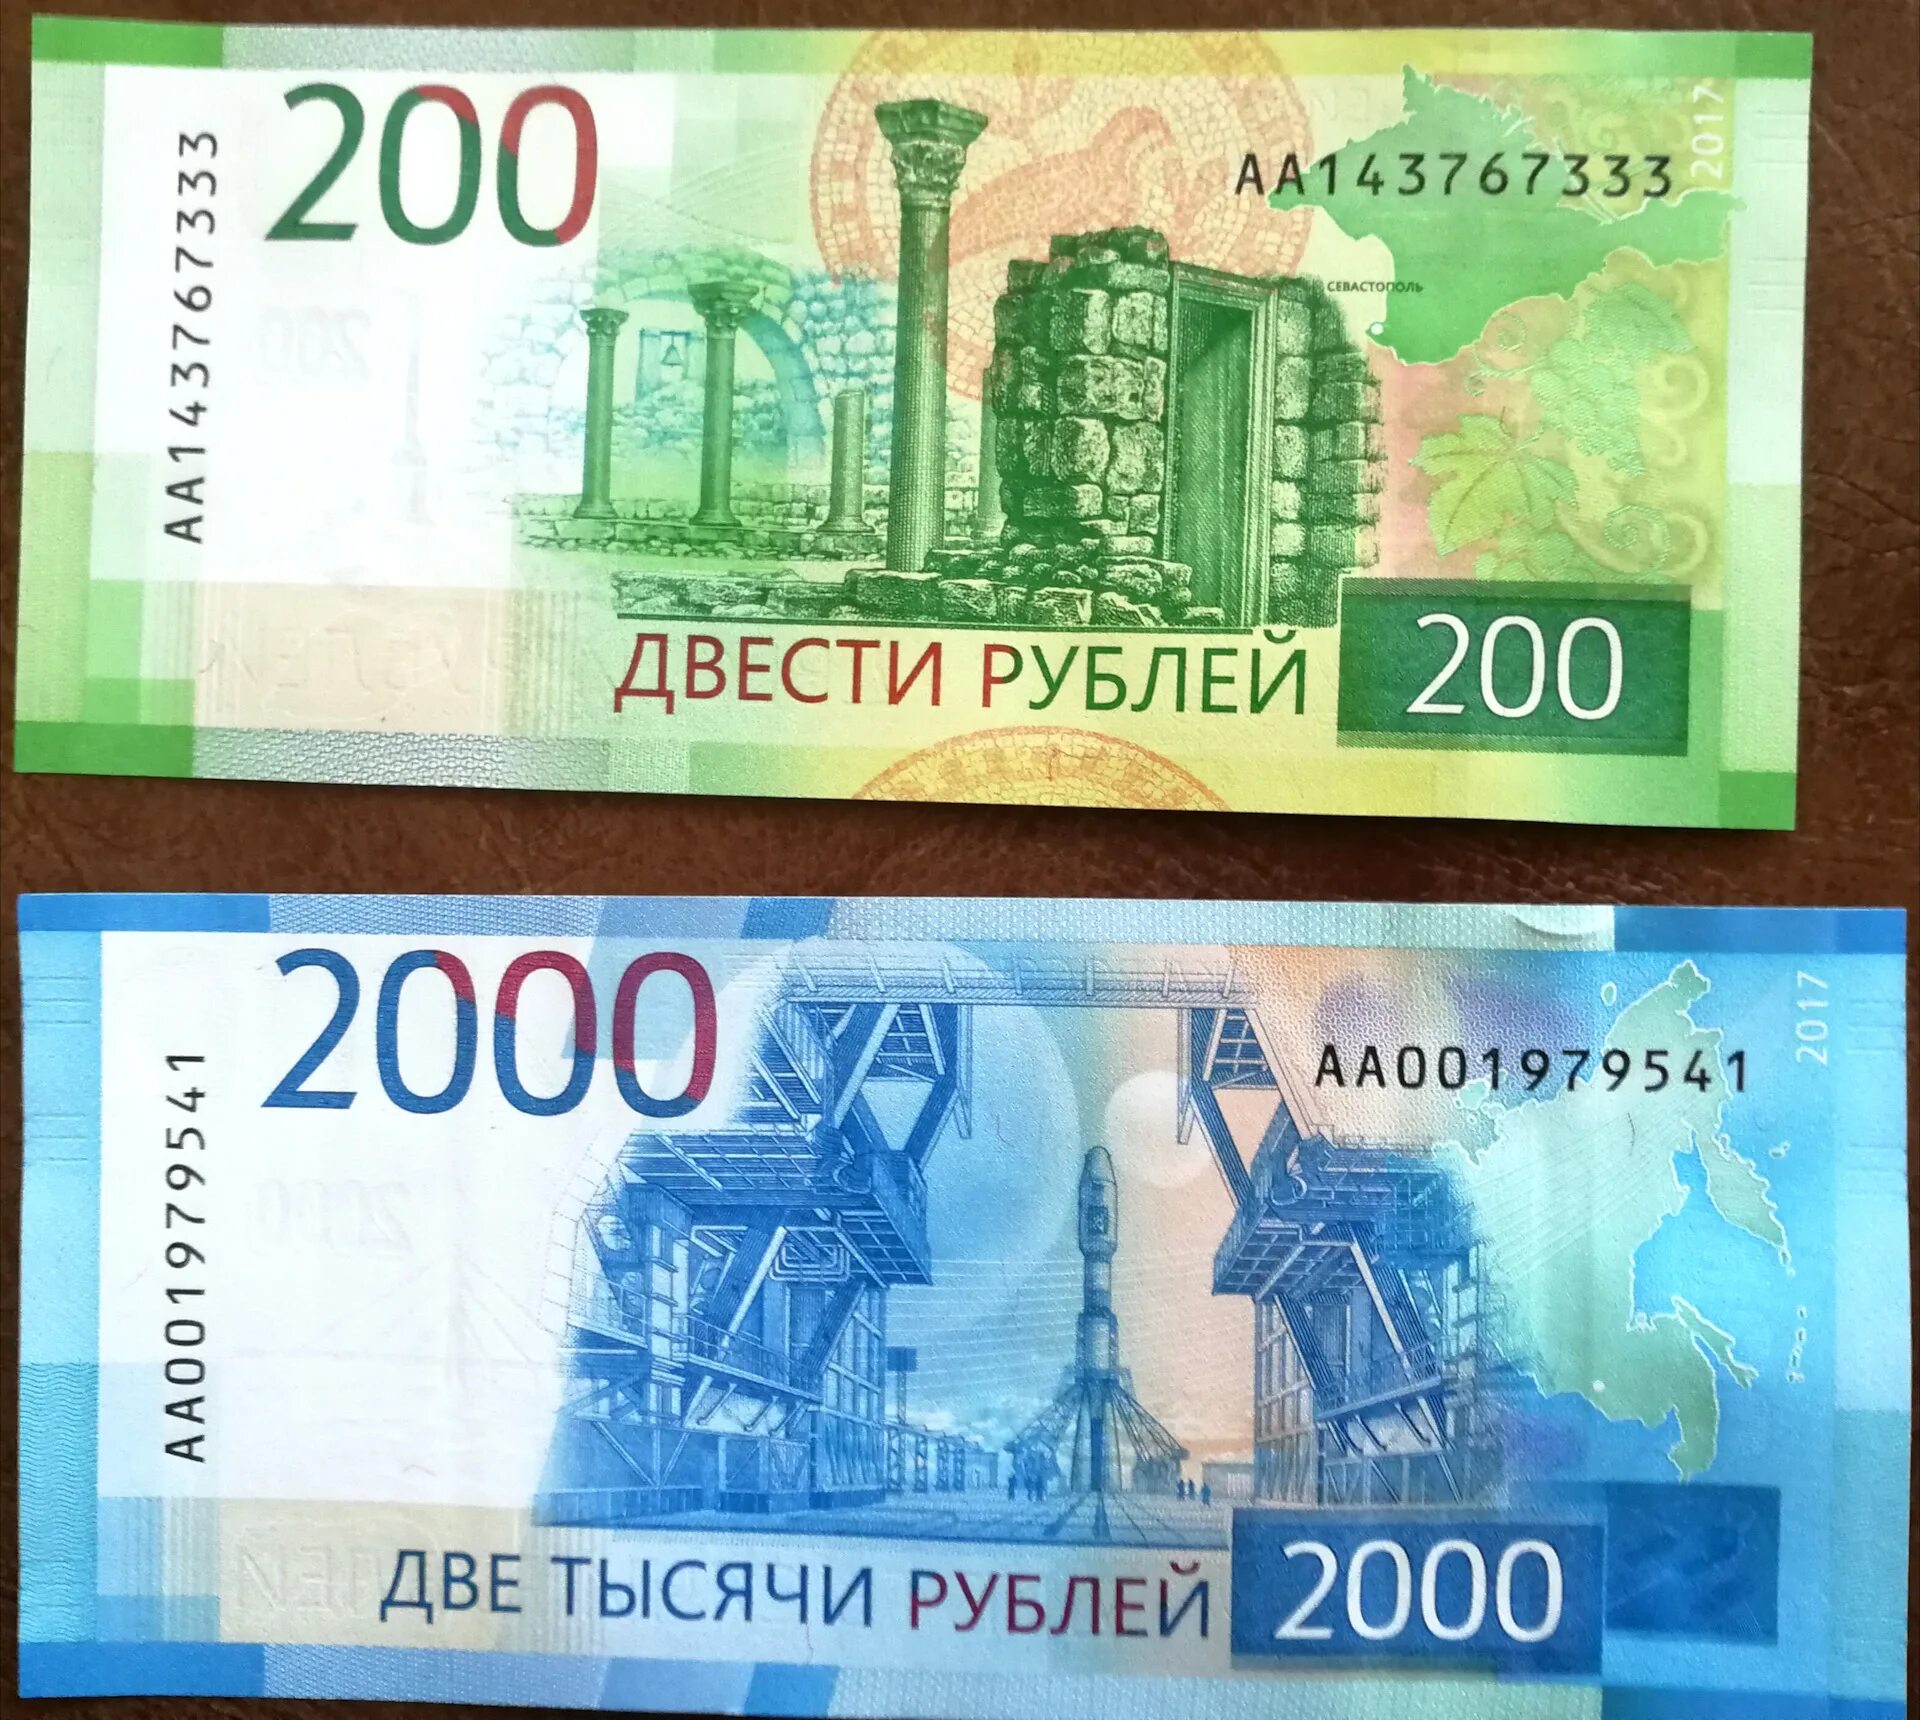 200 Рублей с двух сторон. Номер на 200 рублей. 100 200 2000 Рублей. Картина 200 рублей. 200 рублей 3 процента